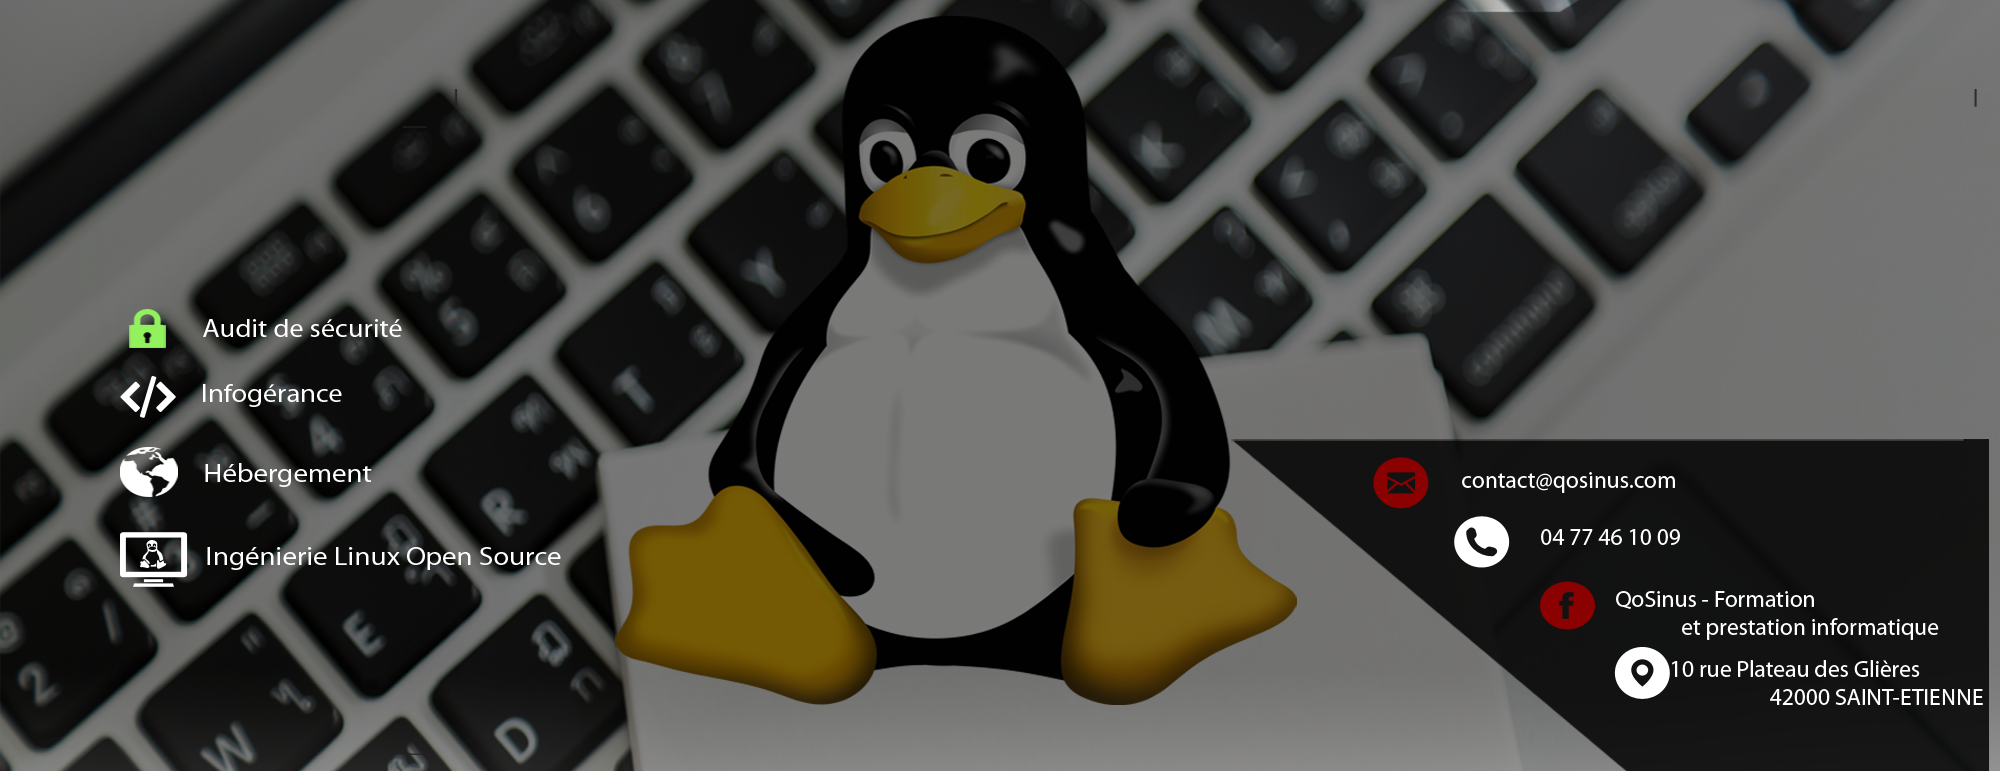 Developpeur web expert Linux!